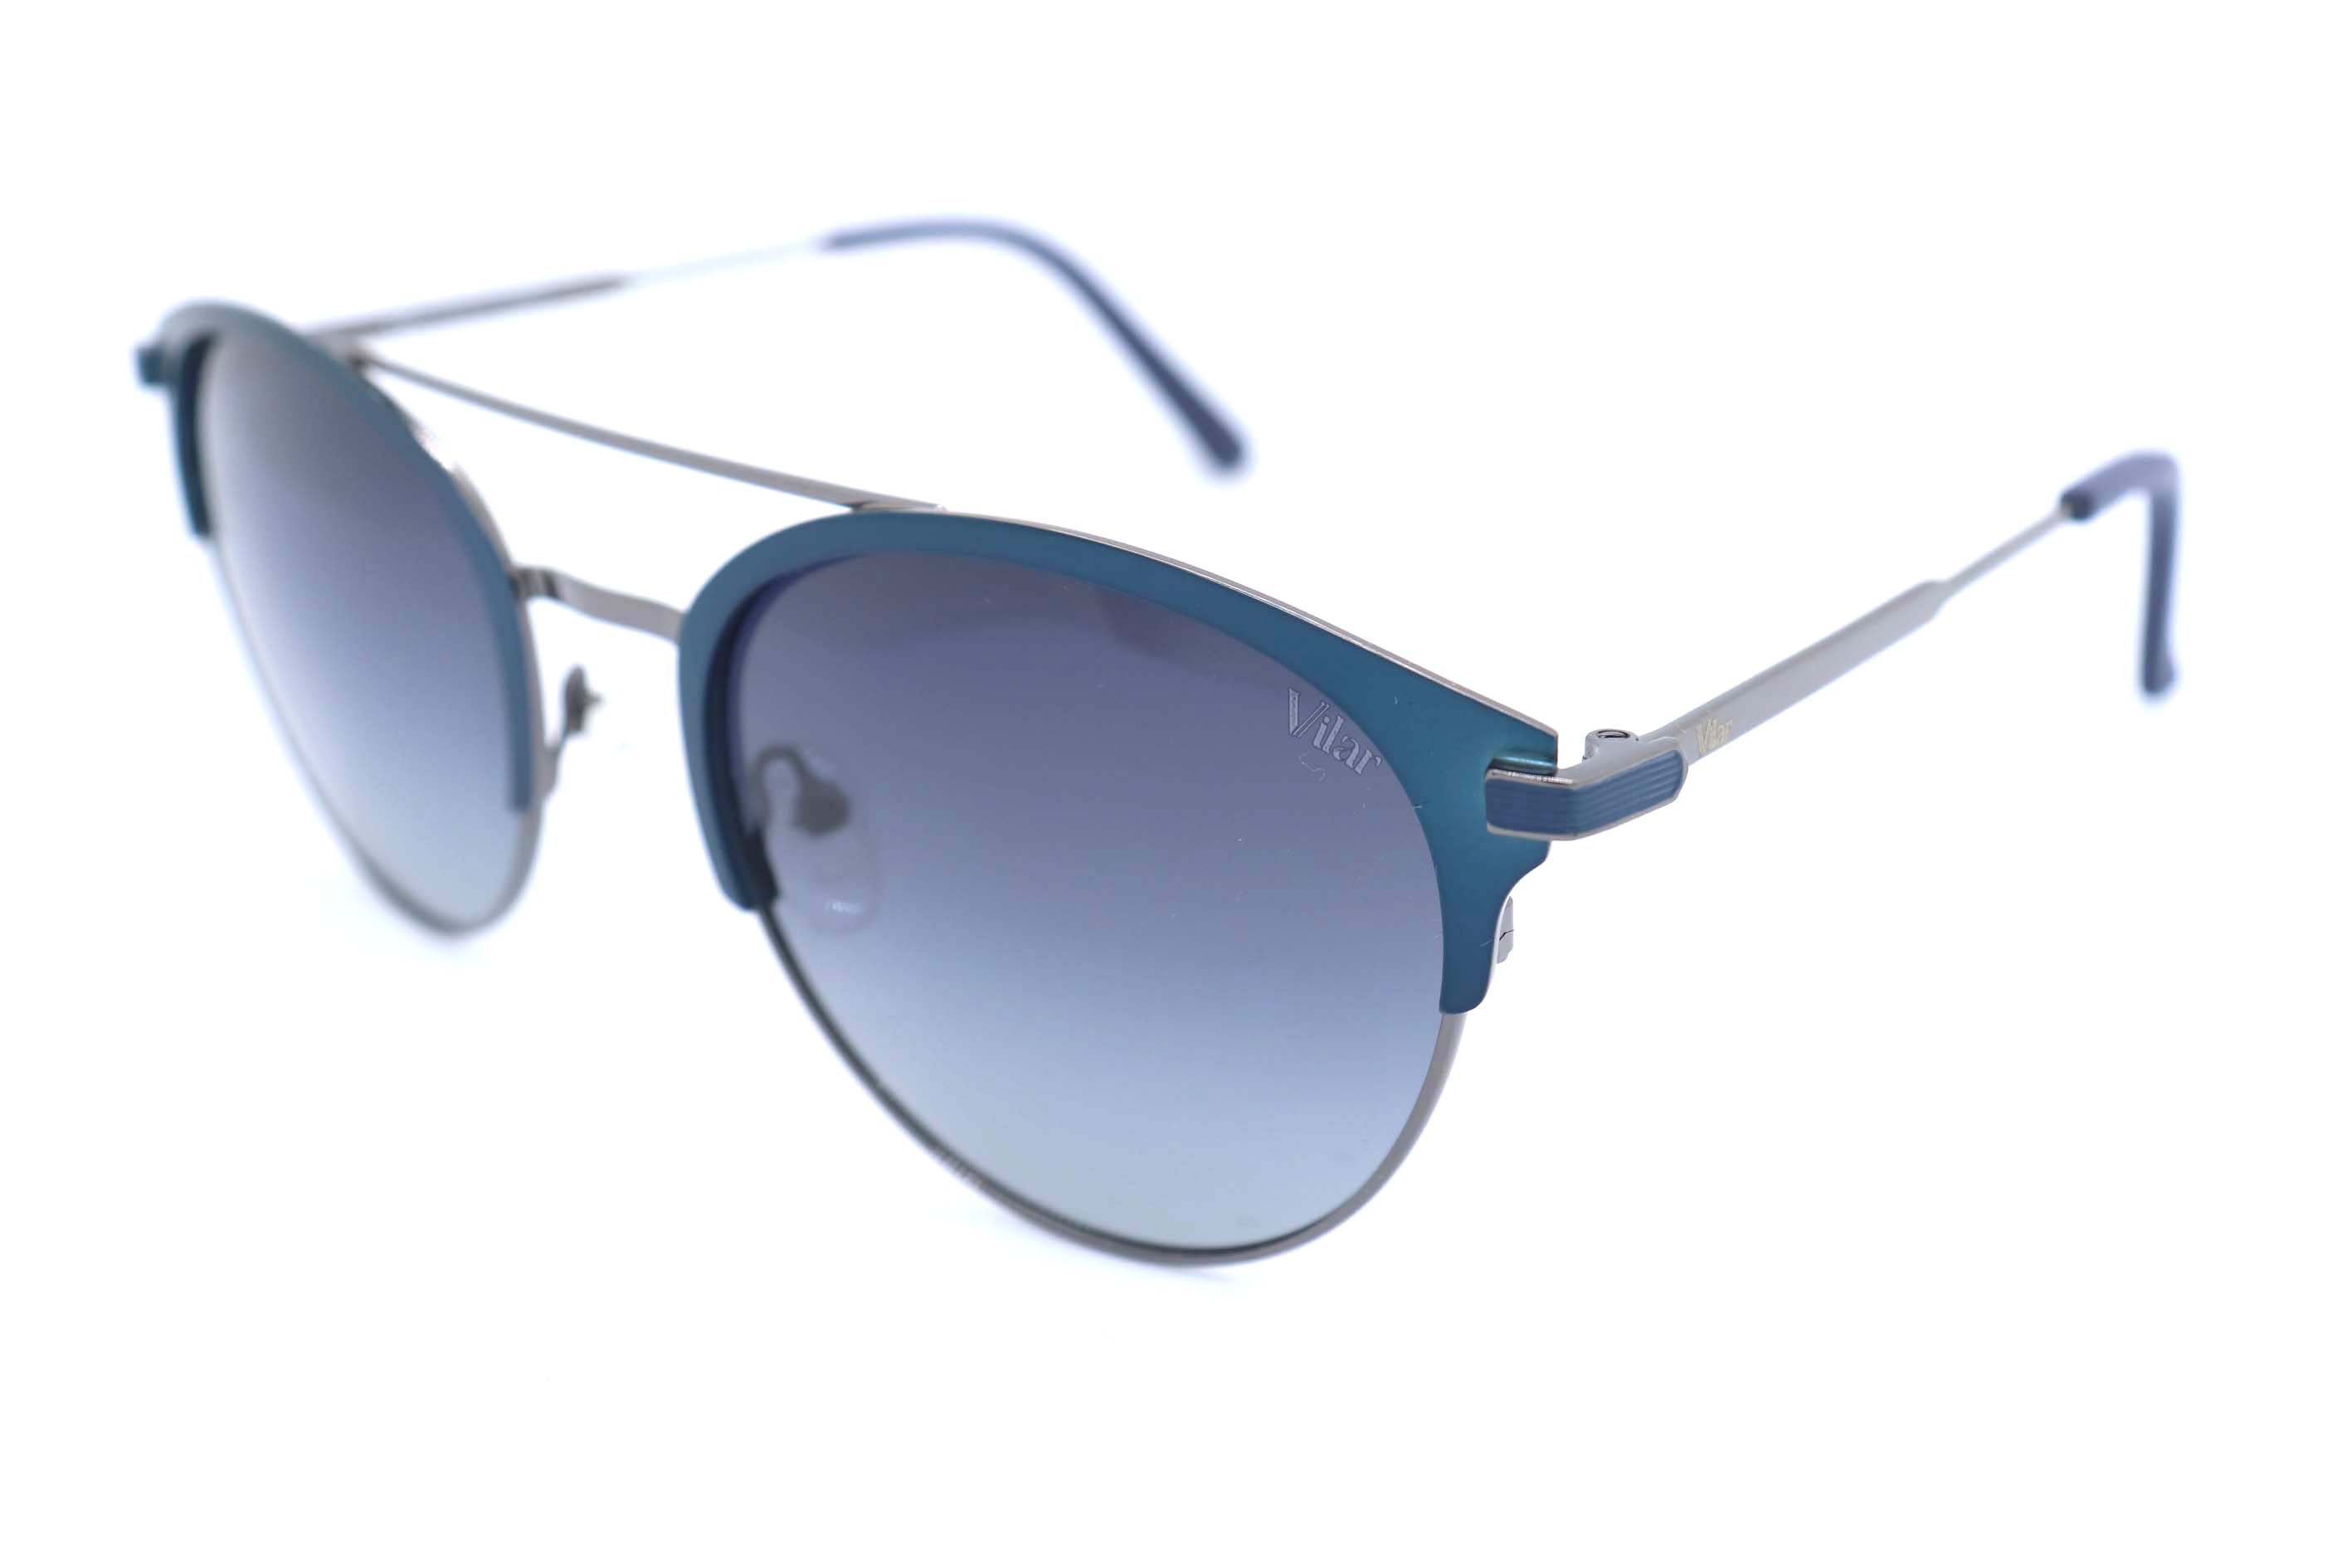 Vilar Sunglasses -5253-c1-54-21-140-Blue